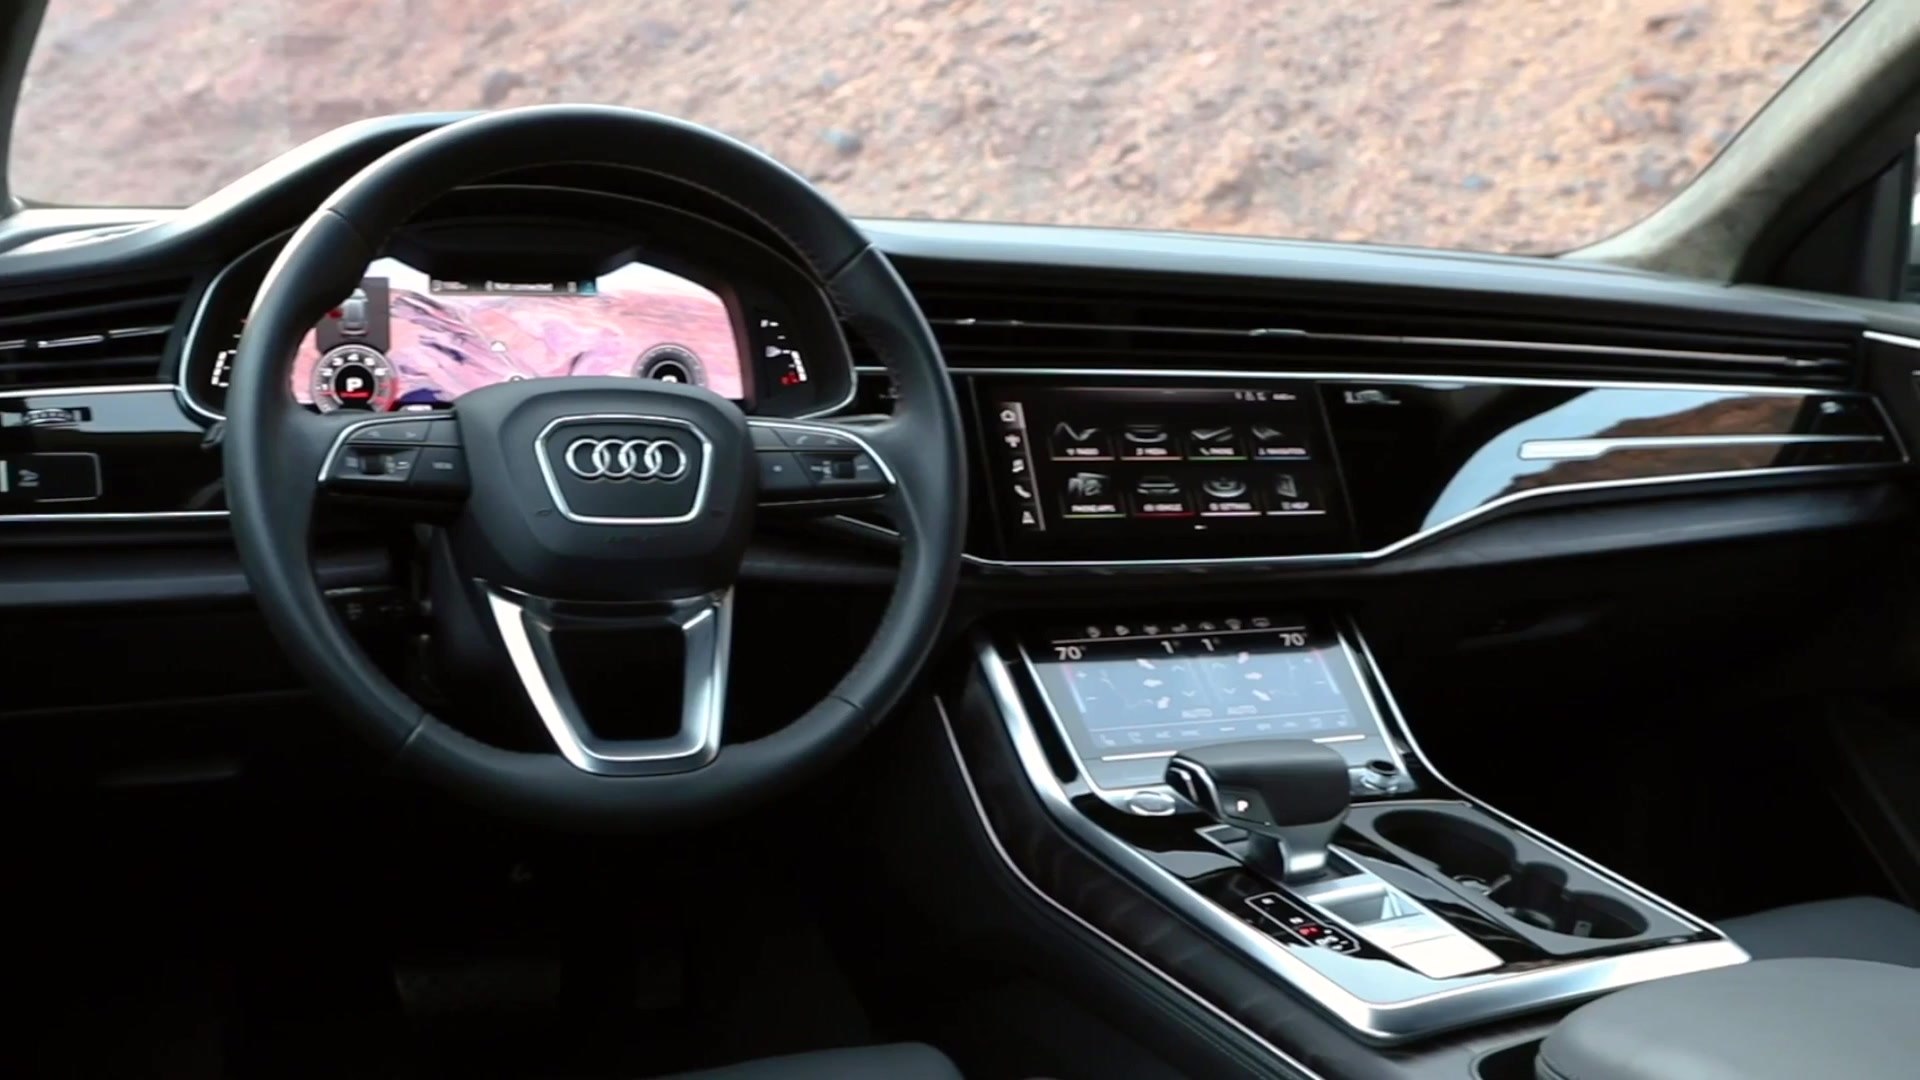 Van sugar Inspect 2019 Audi Q8 Interior Design - video Dailymotion